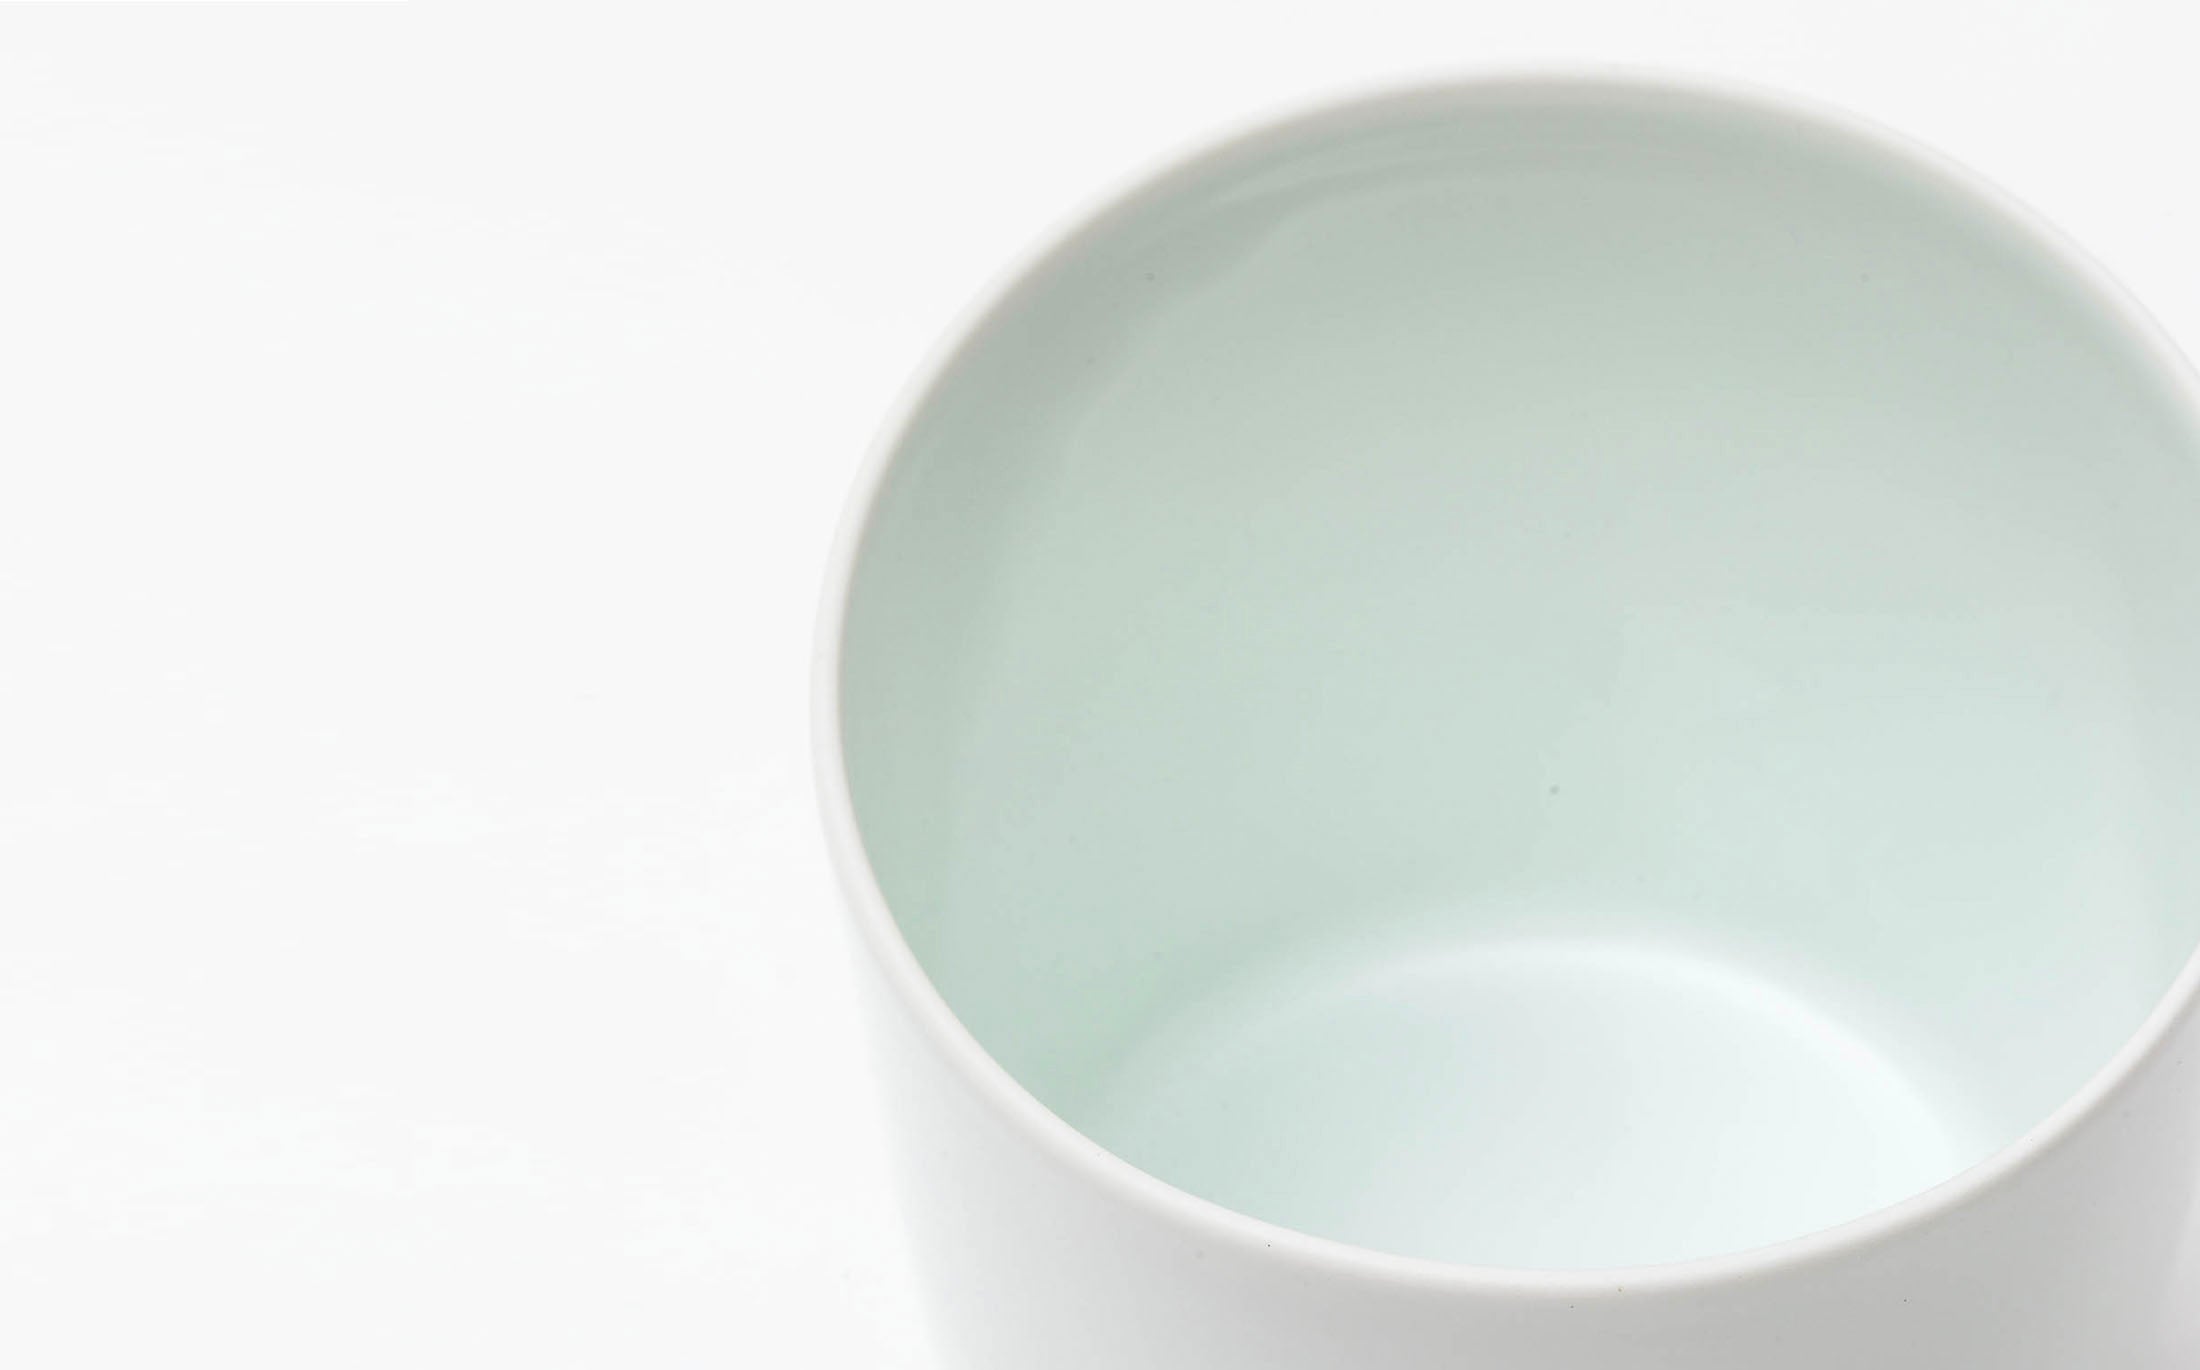 Hiya - Porcelain White - Cup "Water"